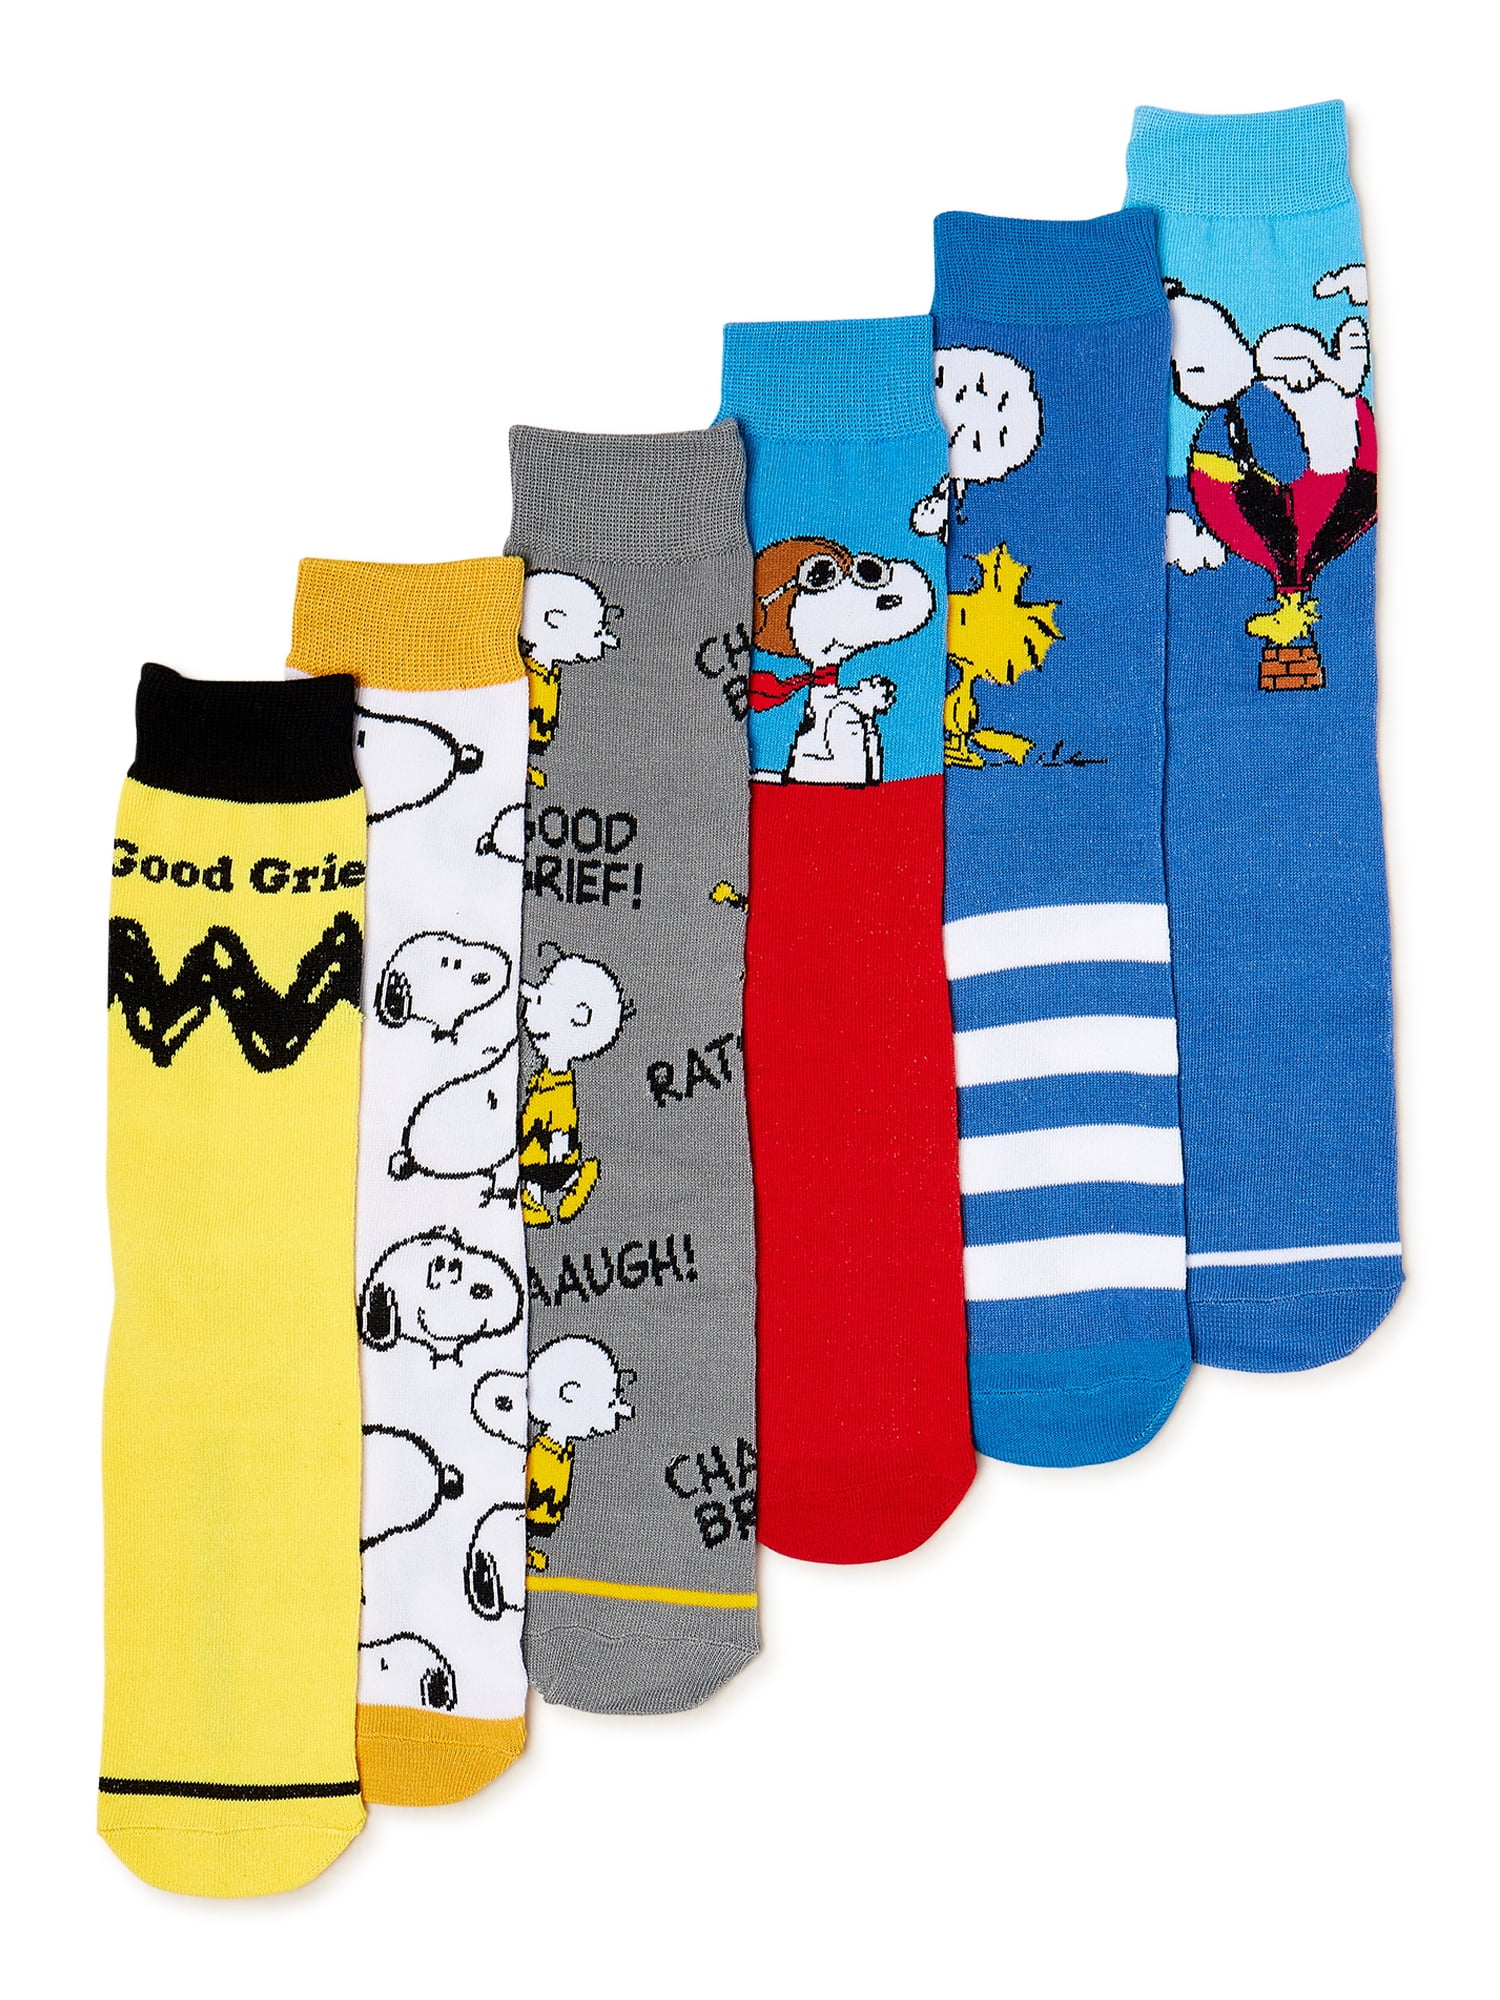 Peanuts Men's Crew Socks, 6-Pack